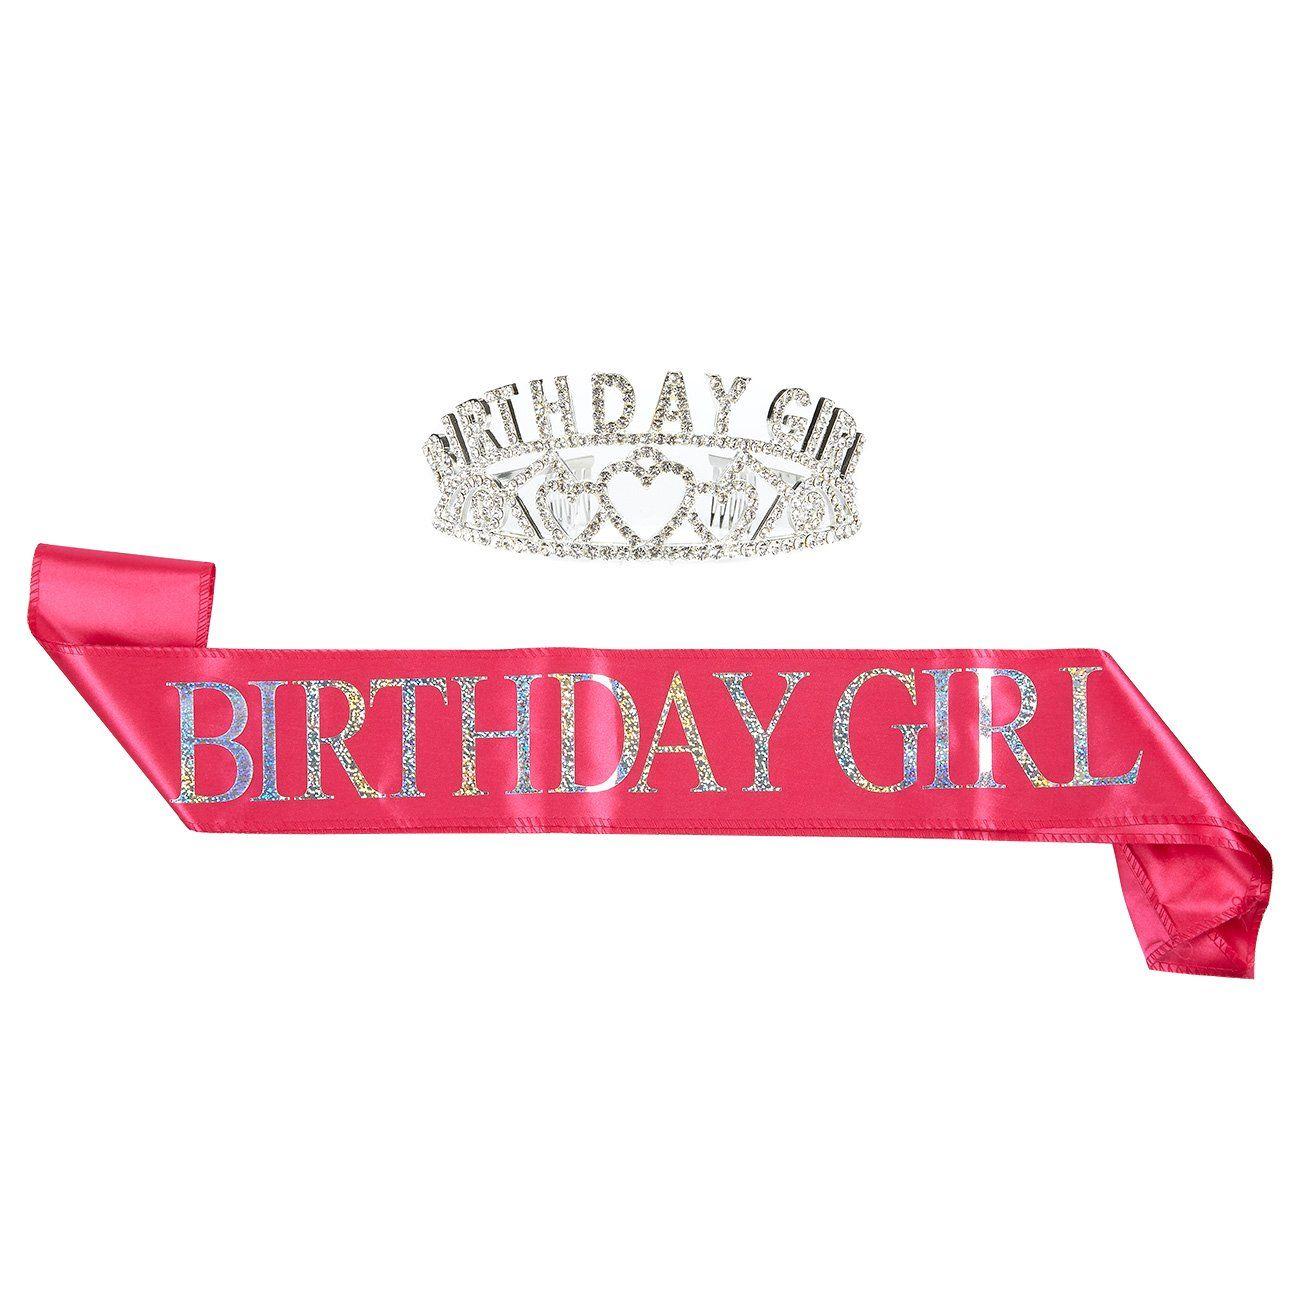 Birthday Girl Logo - Amazon.com: Blue Panda 2-Pack Set Birthday Girl Tiara Birthday Sash ...